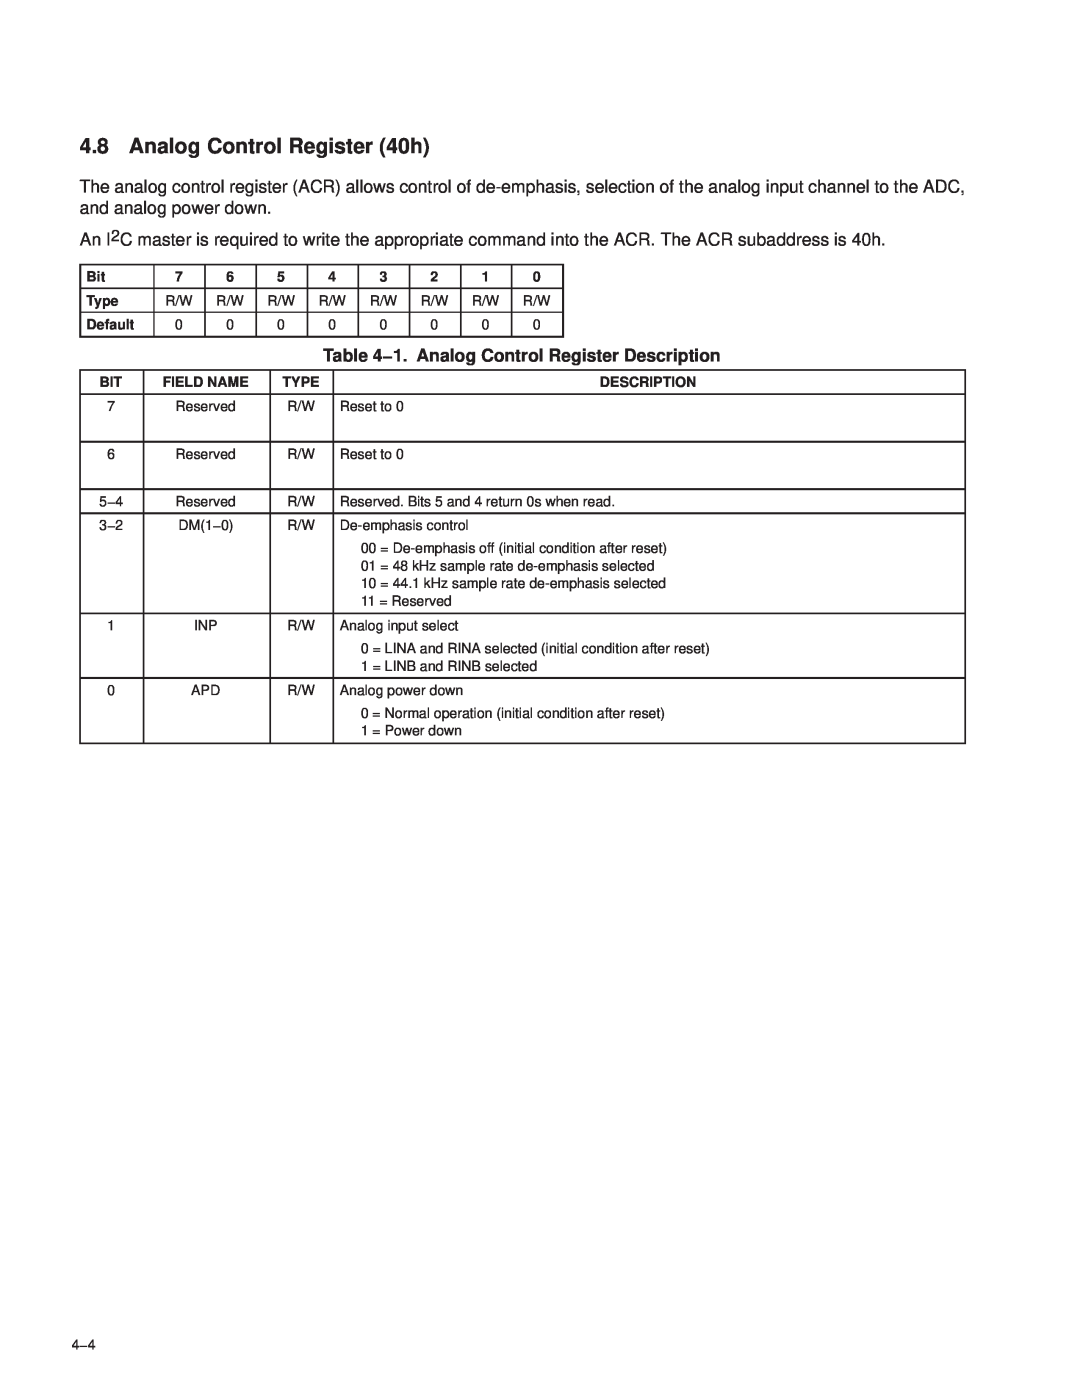 Texas Instruments TAS3002 manual Analog Control Register 40h, 1. Analog Control Register Description 